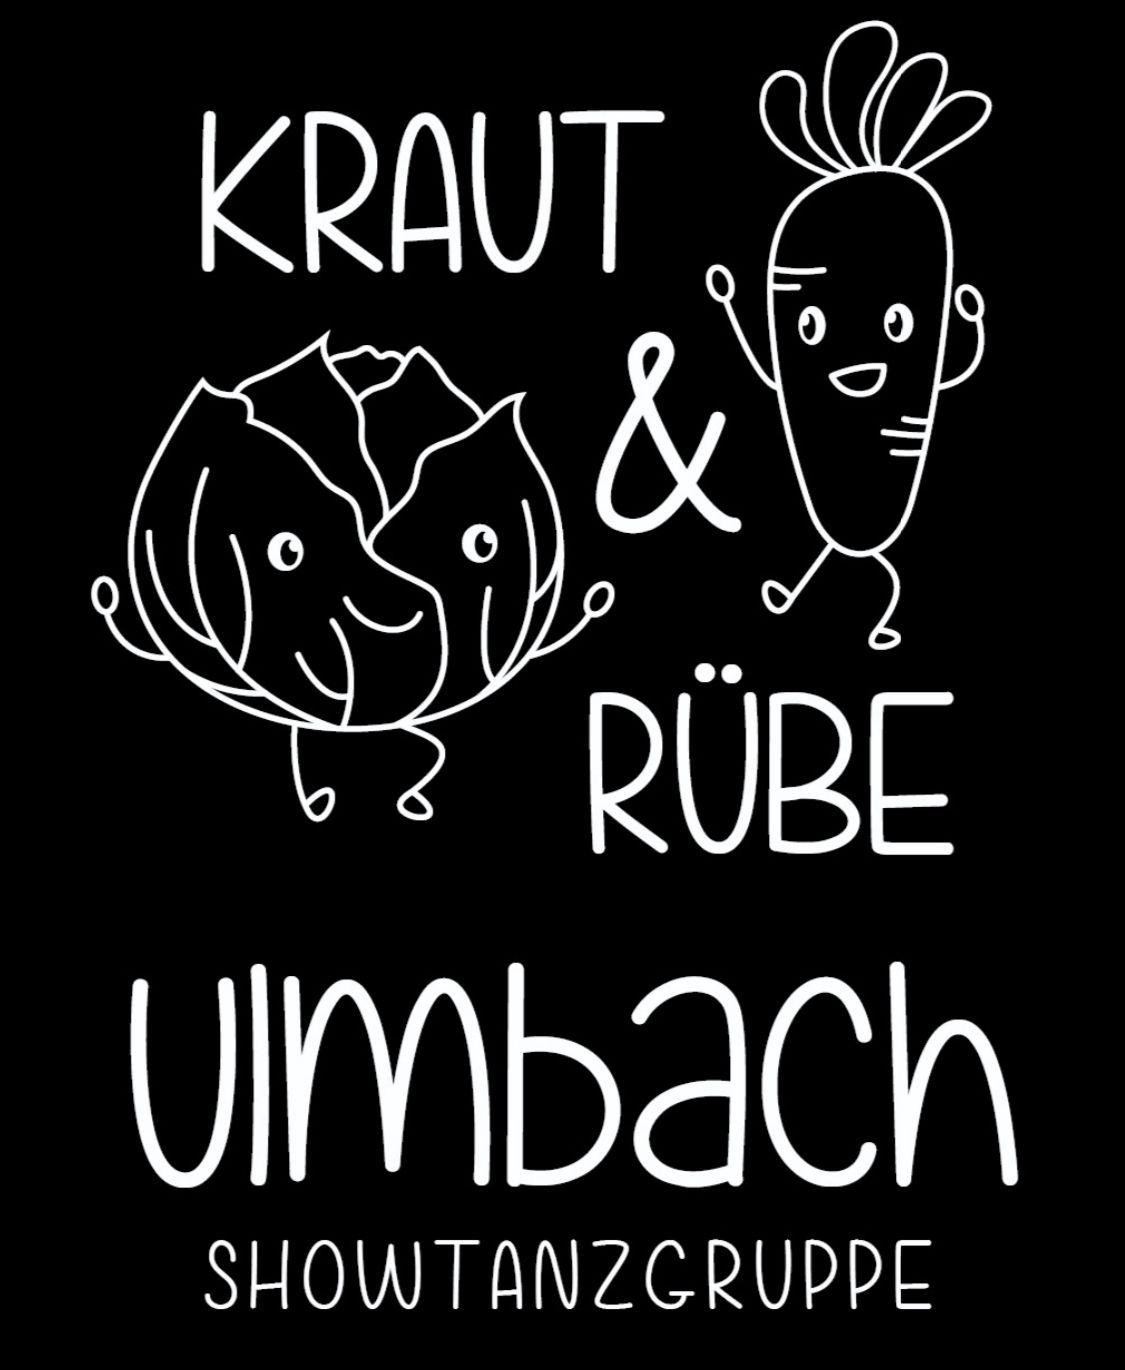 Showtanzgruppe<br>Kraut un Rübe Ulmbach<br>